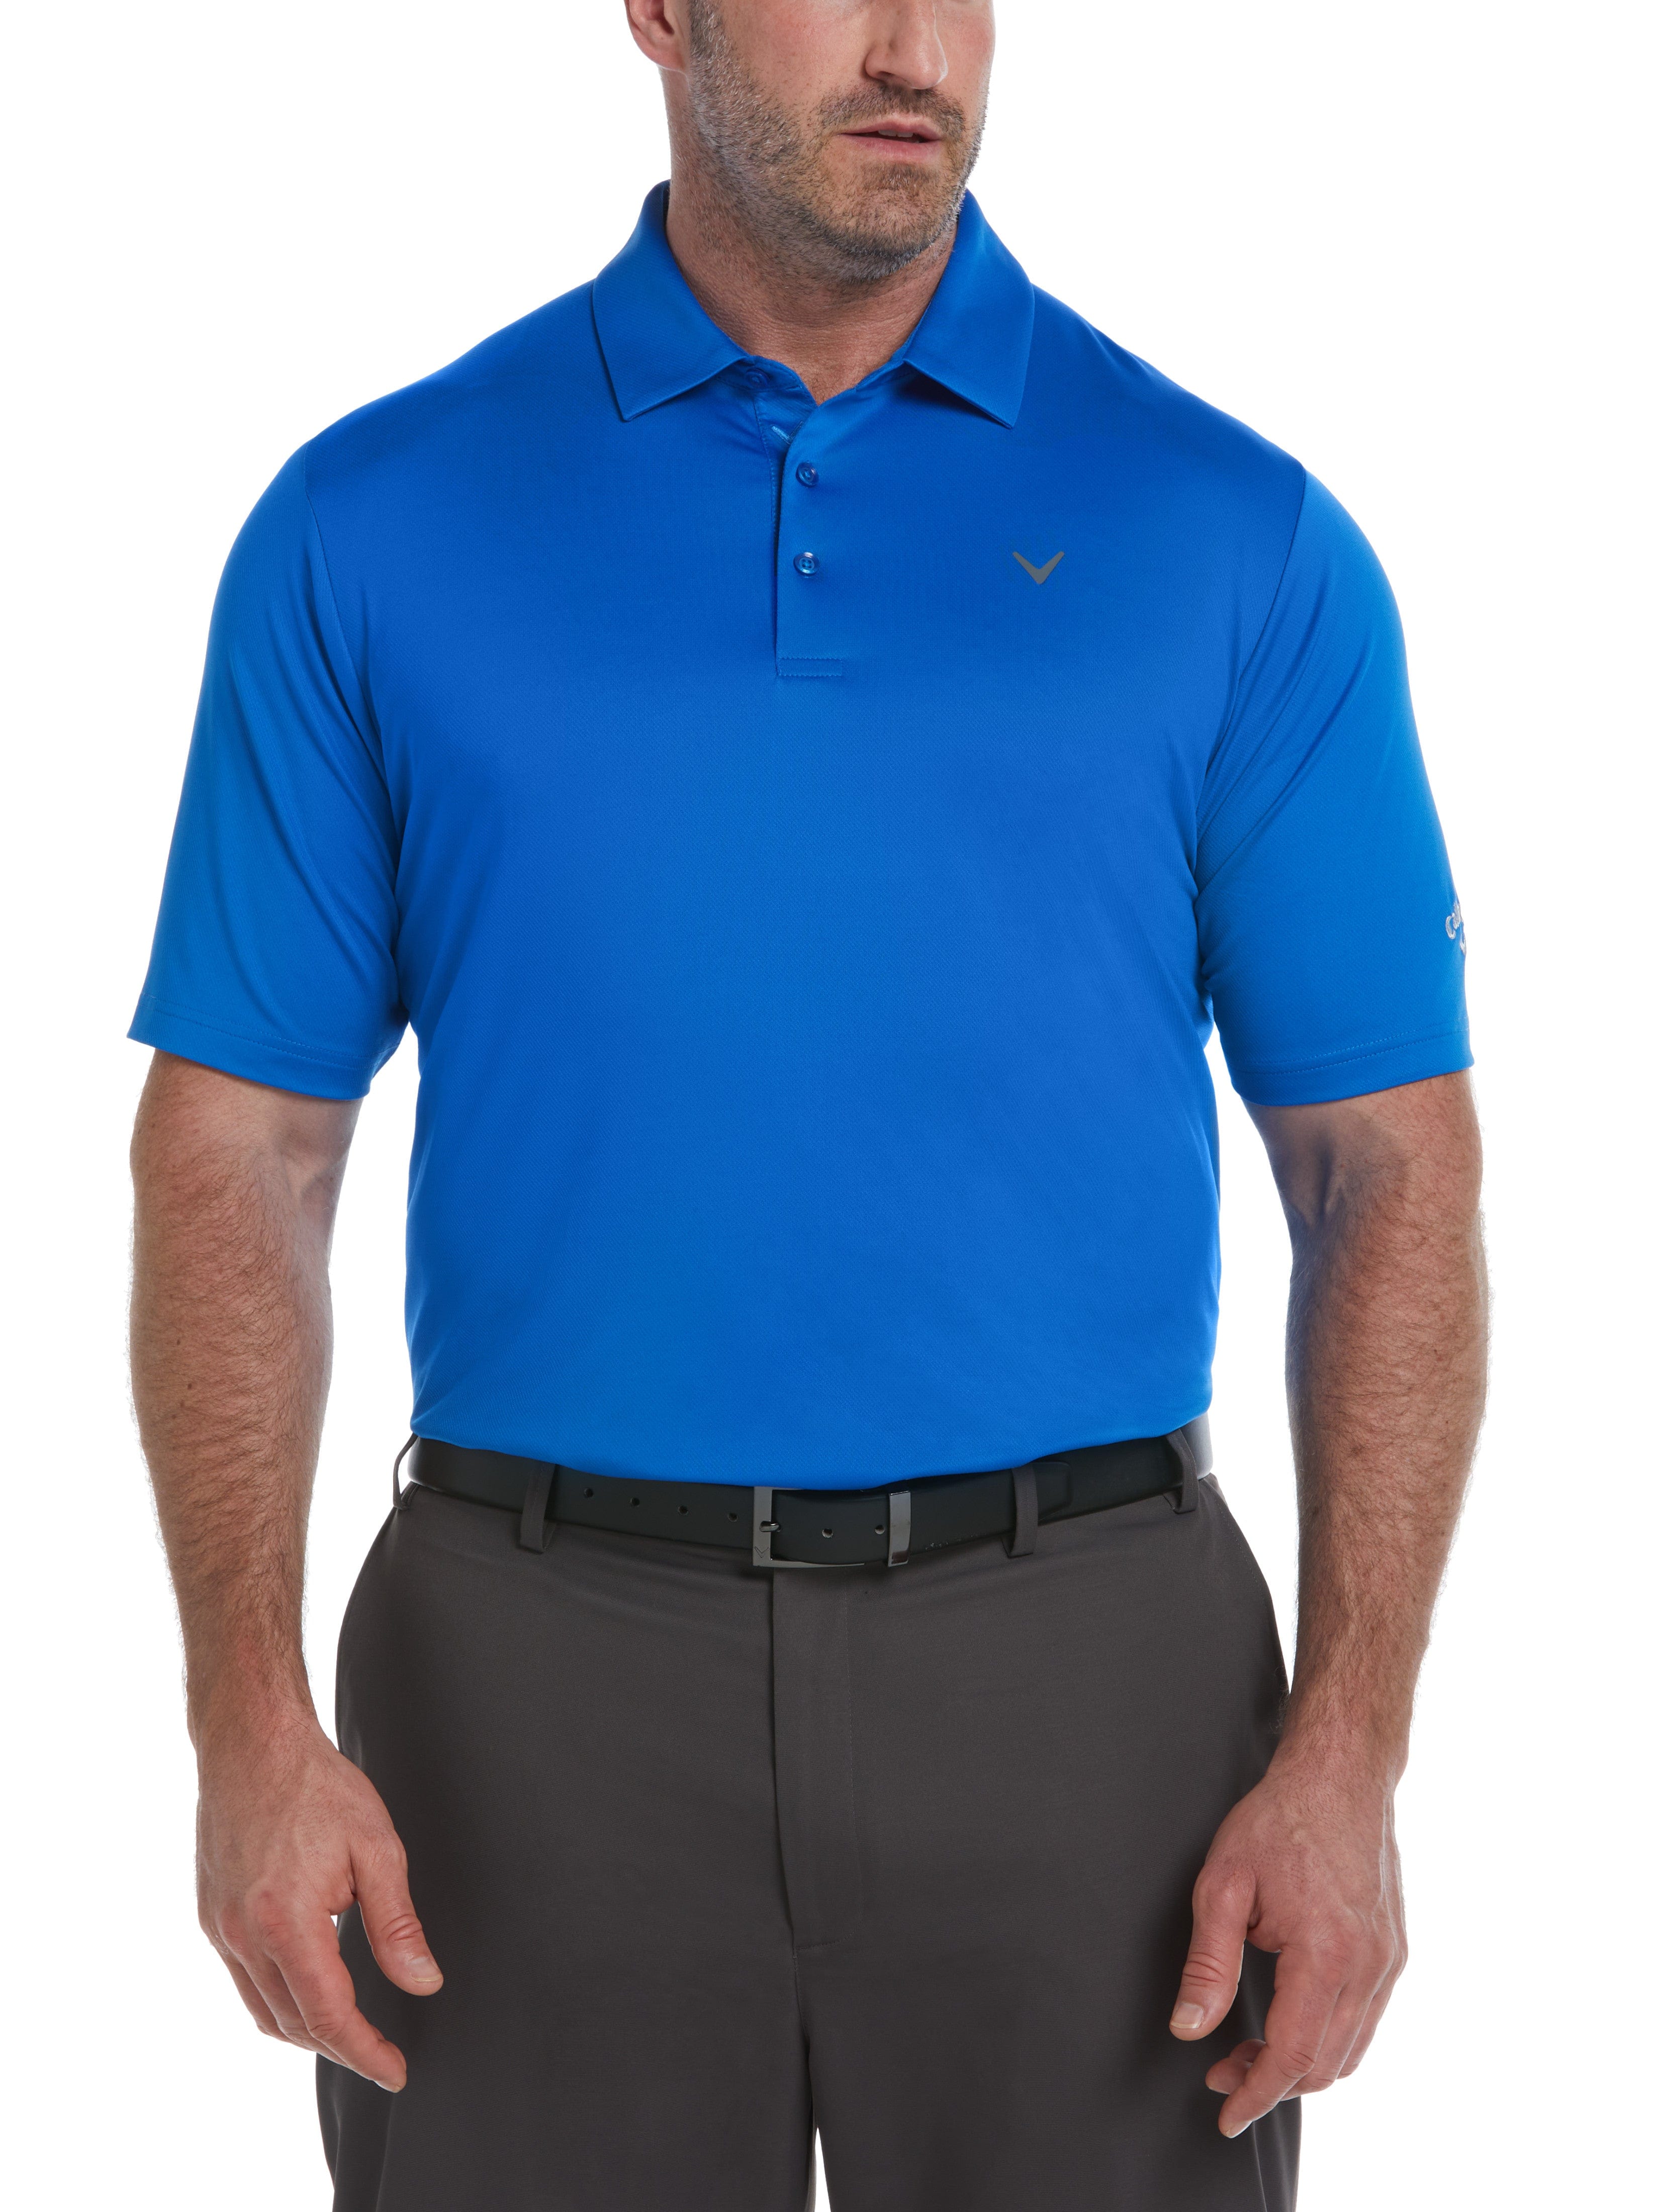 Callaway Apparel Mens Big & Tall Solid Swing Tech Golf Polo Shirt, Size 5XLT, Magnetic Blue, Polyester/Elastane | Golf Apparel Shop